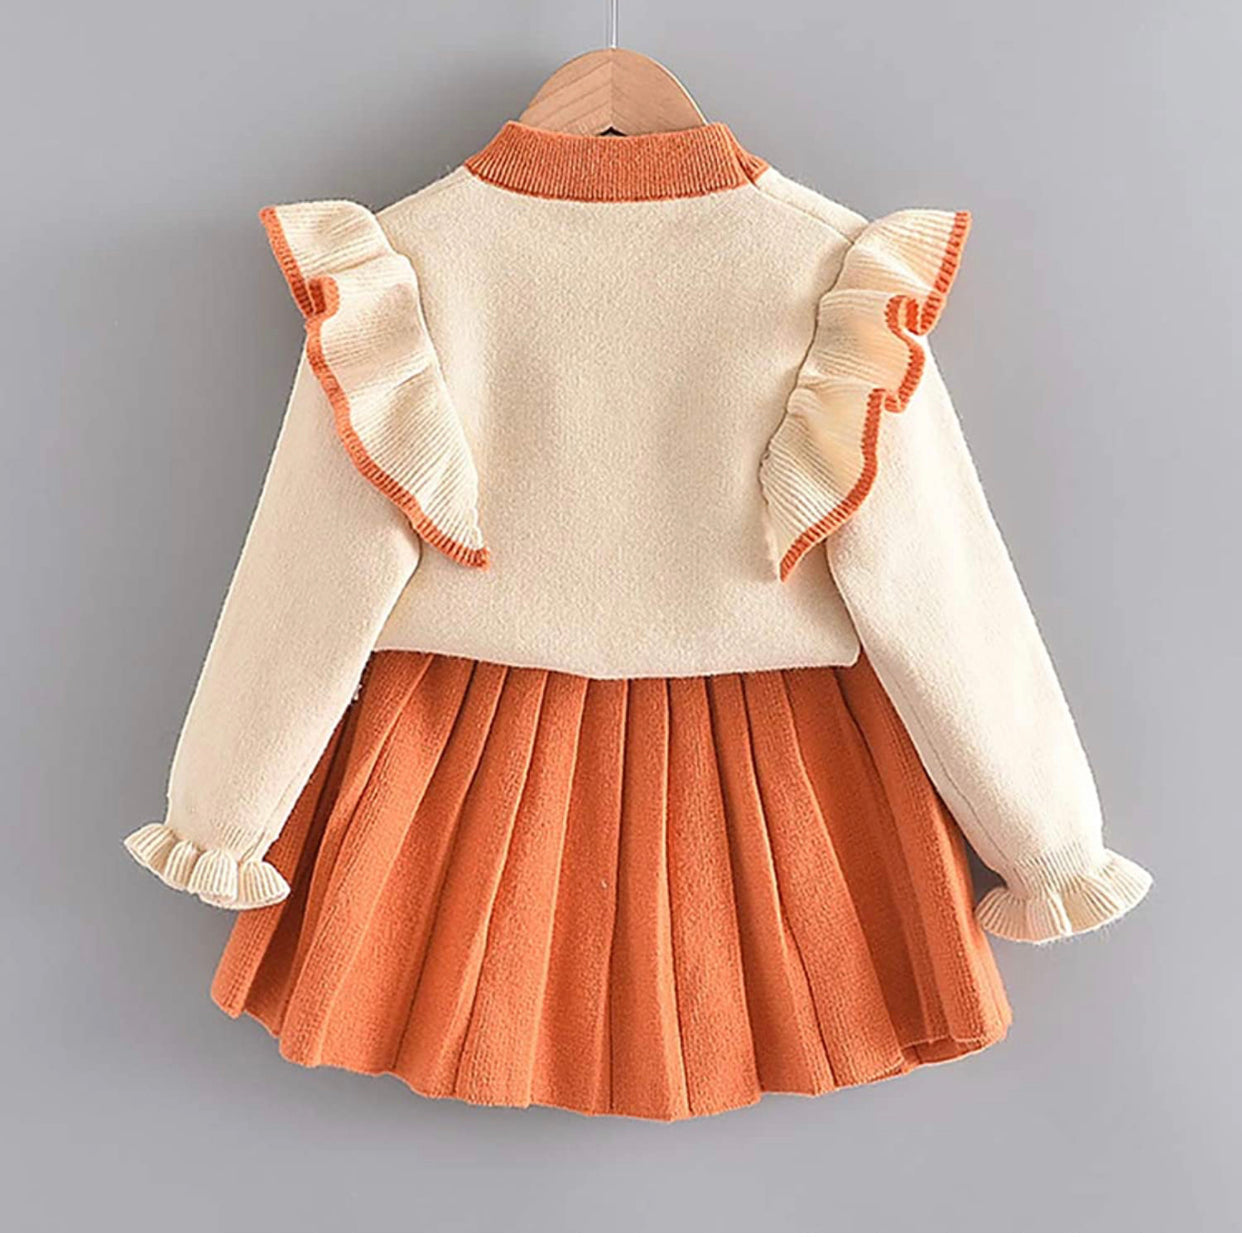 Sweat skirt and blouse for little girls - Godshandfashion -